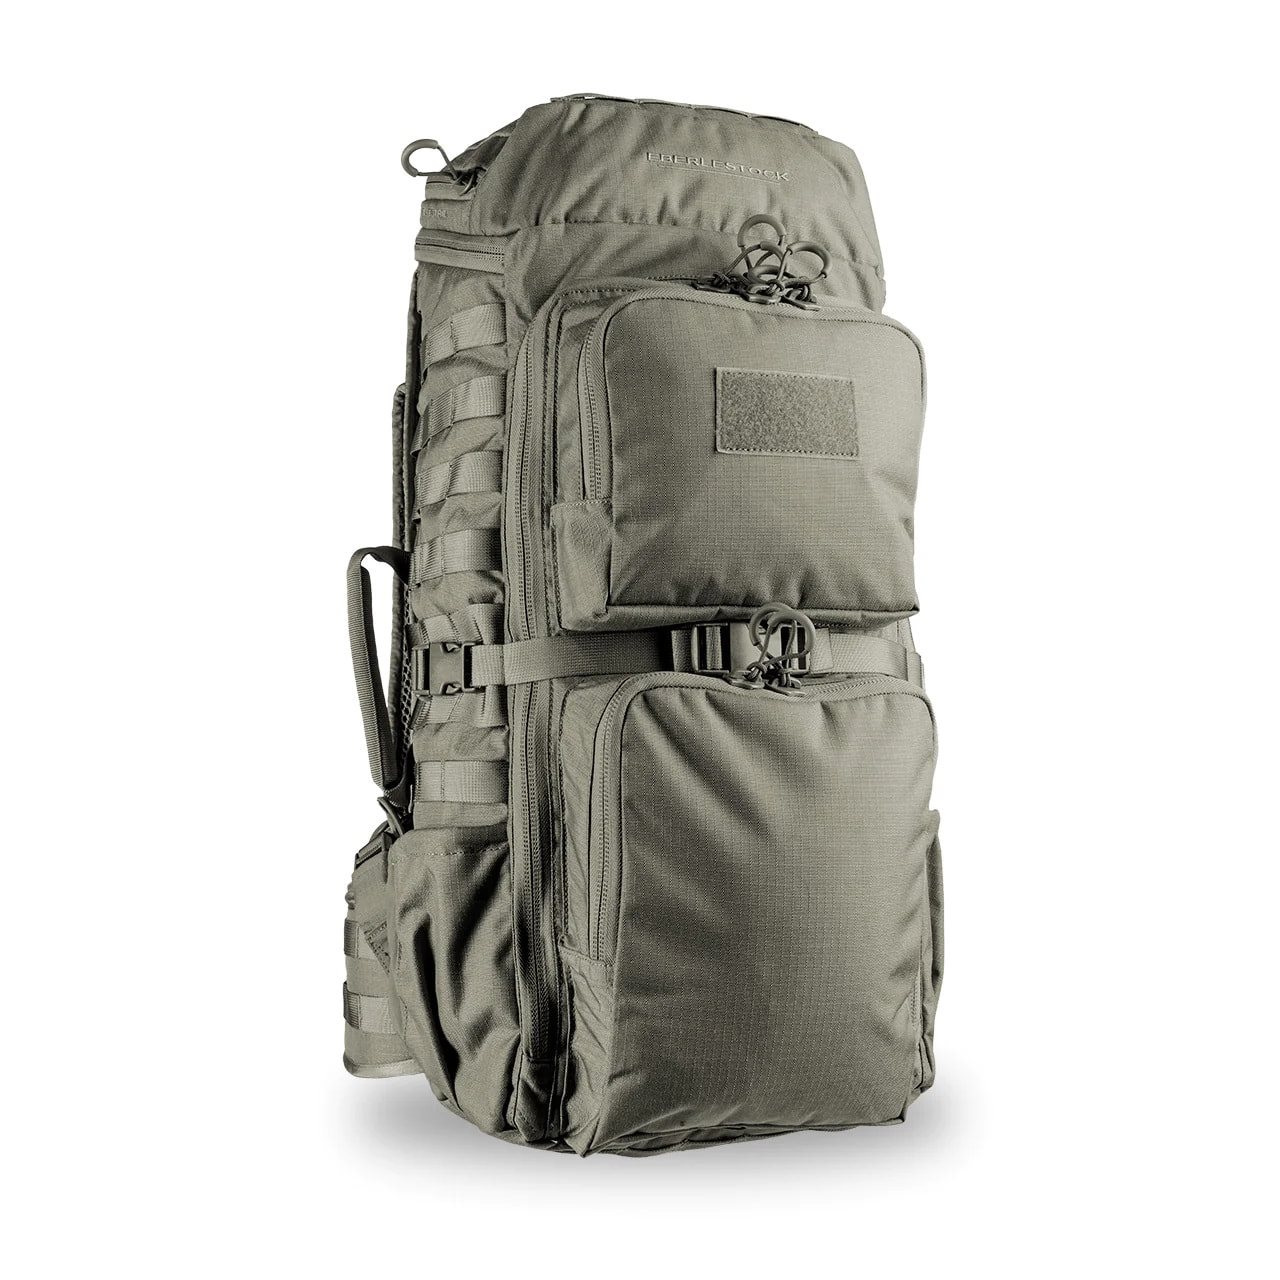 Backpack F3 FAC TRACK V3 MILITARY GREEN EBERLESTOCK F3FJV3 L-11